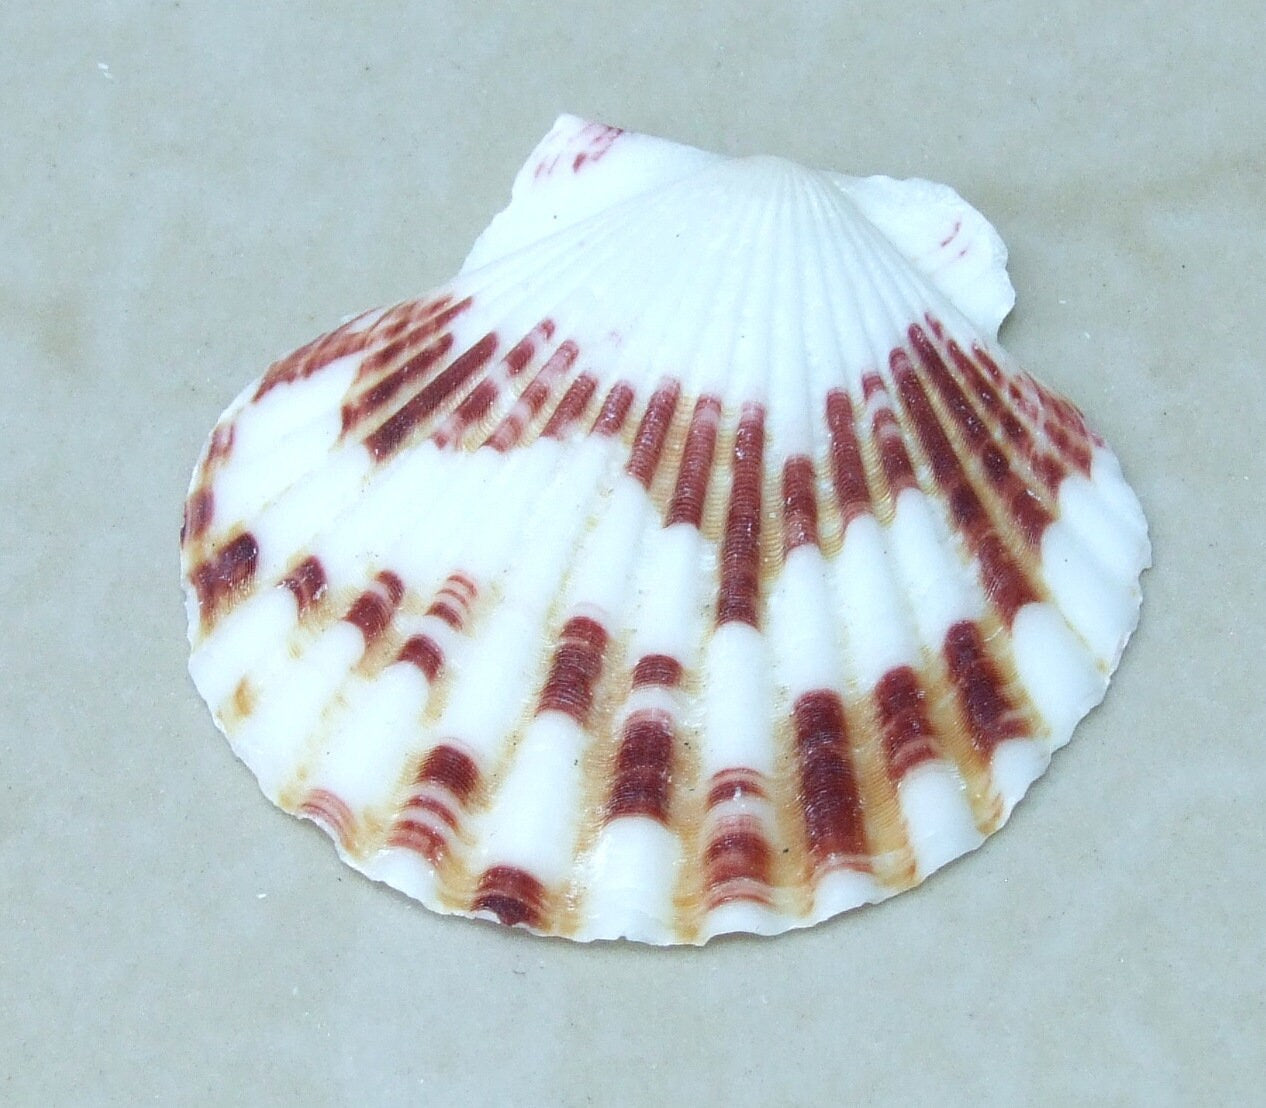 10 Natural Scallop Shell, Undrilled Seashells, Natural Seashells, Craft Shells, Pecten Shells, Beach Decor, 40mm - 55mm, 10 Shells, 8-53